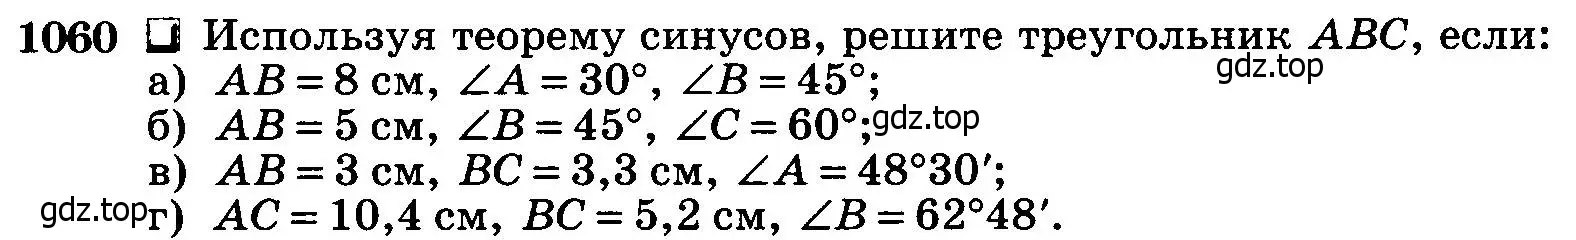 Условие номер 1060 (страница 267) гдз по геометрии 7-9 класс Атанасян, Бутузов, учебник